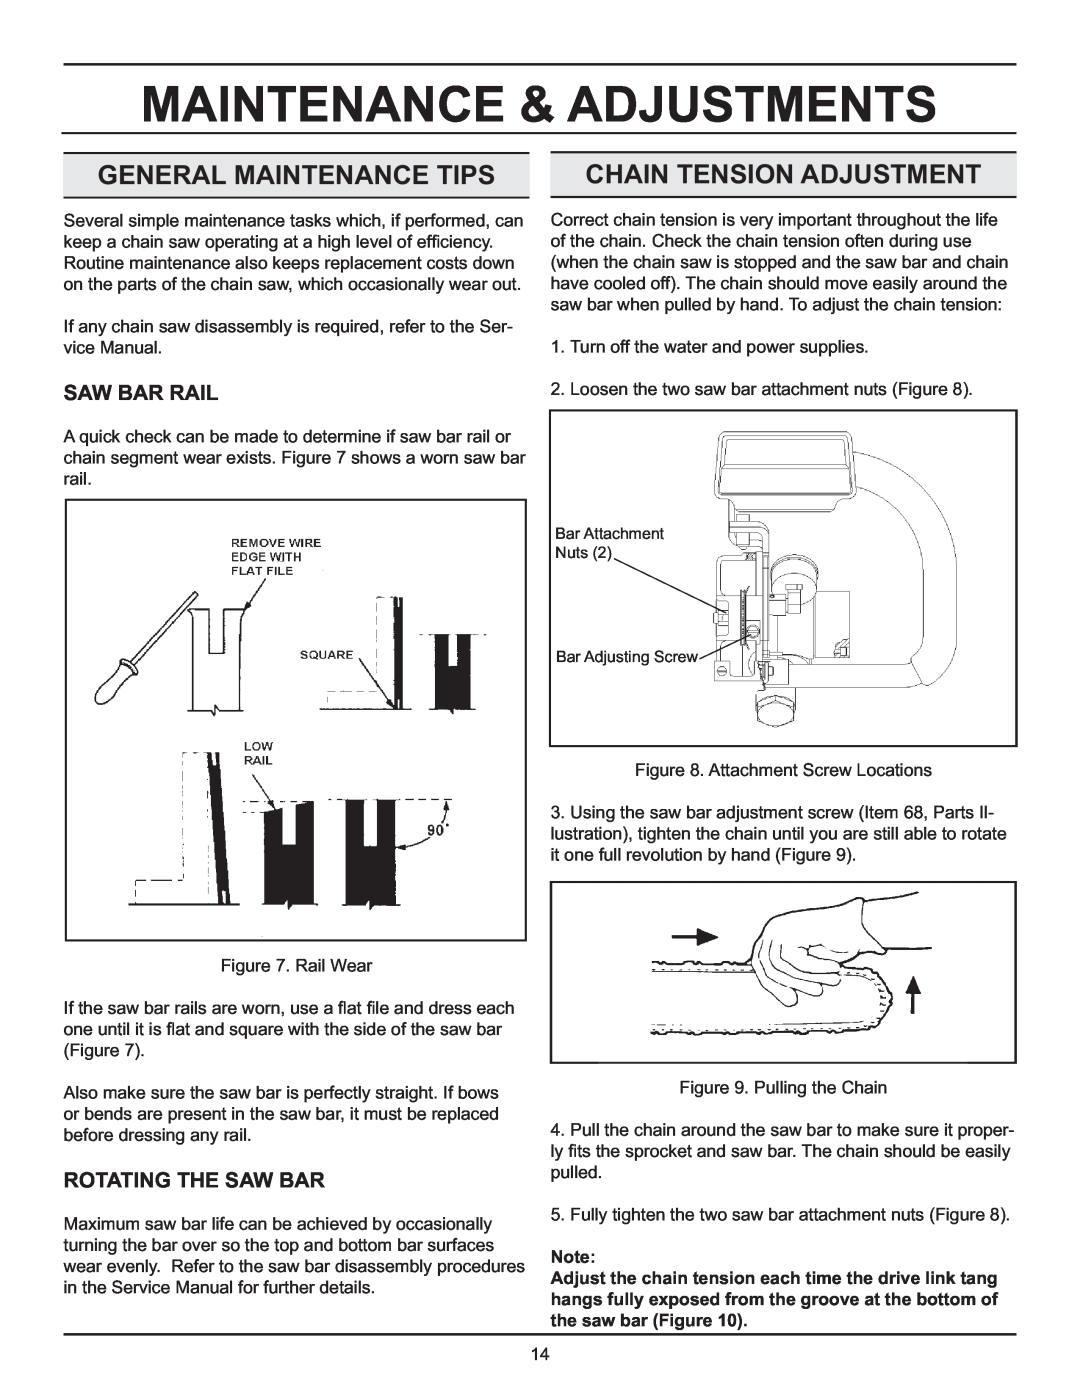 Stanley Black & Decker DS06 Maintenance & Adjustments, General Maintenance Tips, Chain Tension Adjustment, Saw Bar Rail 